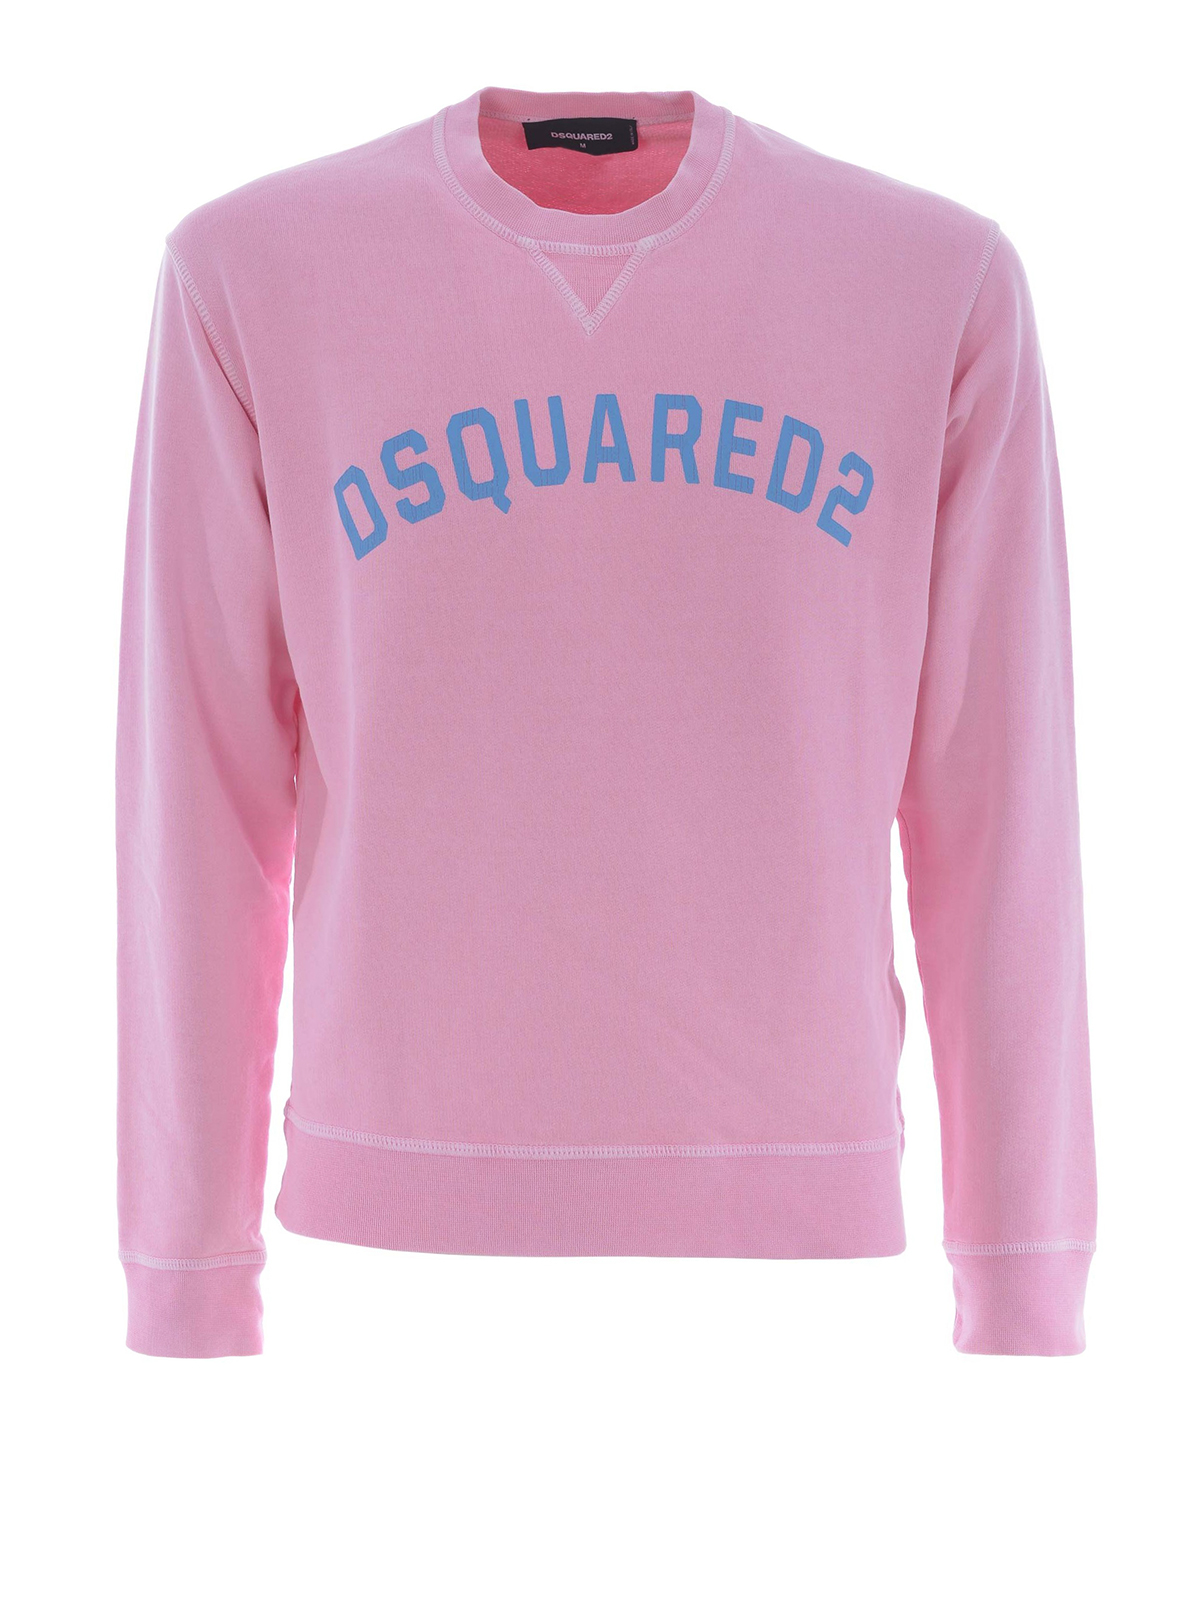 dsquared sweatshirt pink - 61% remise 